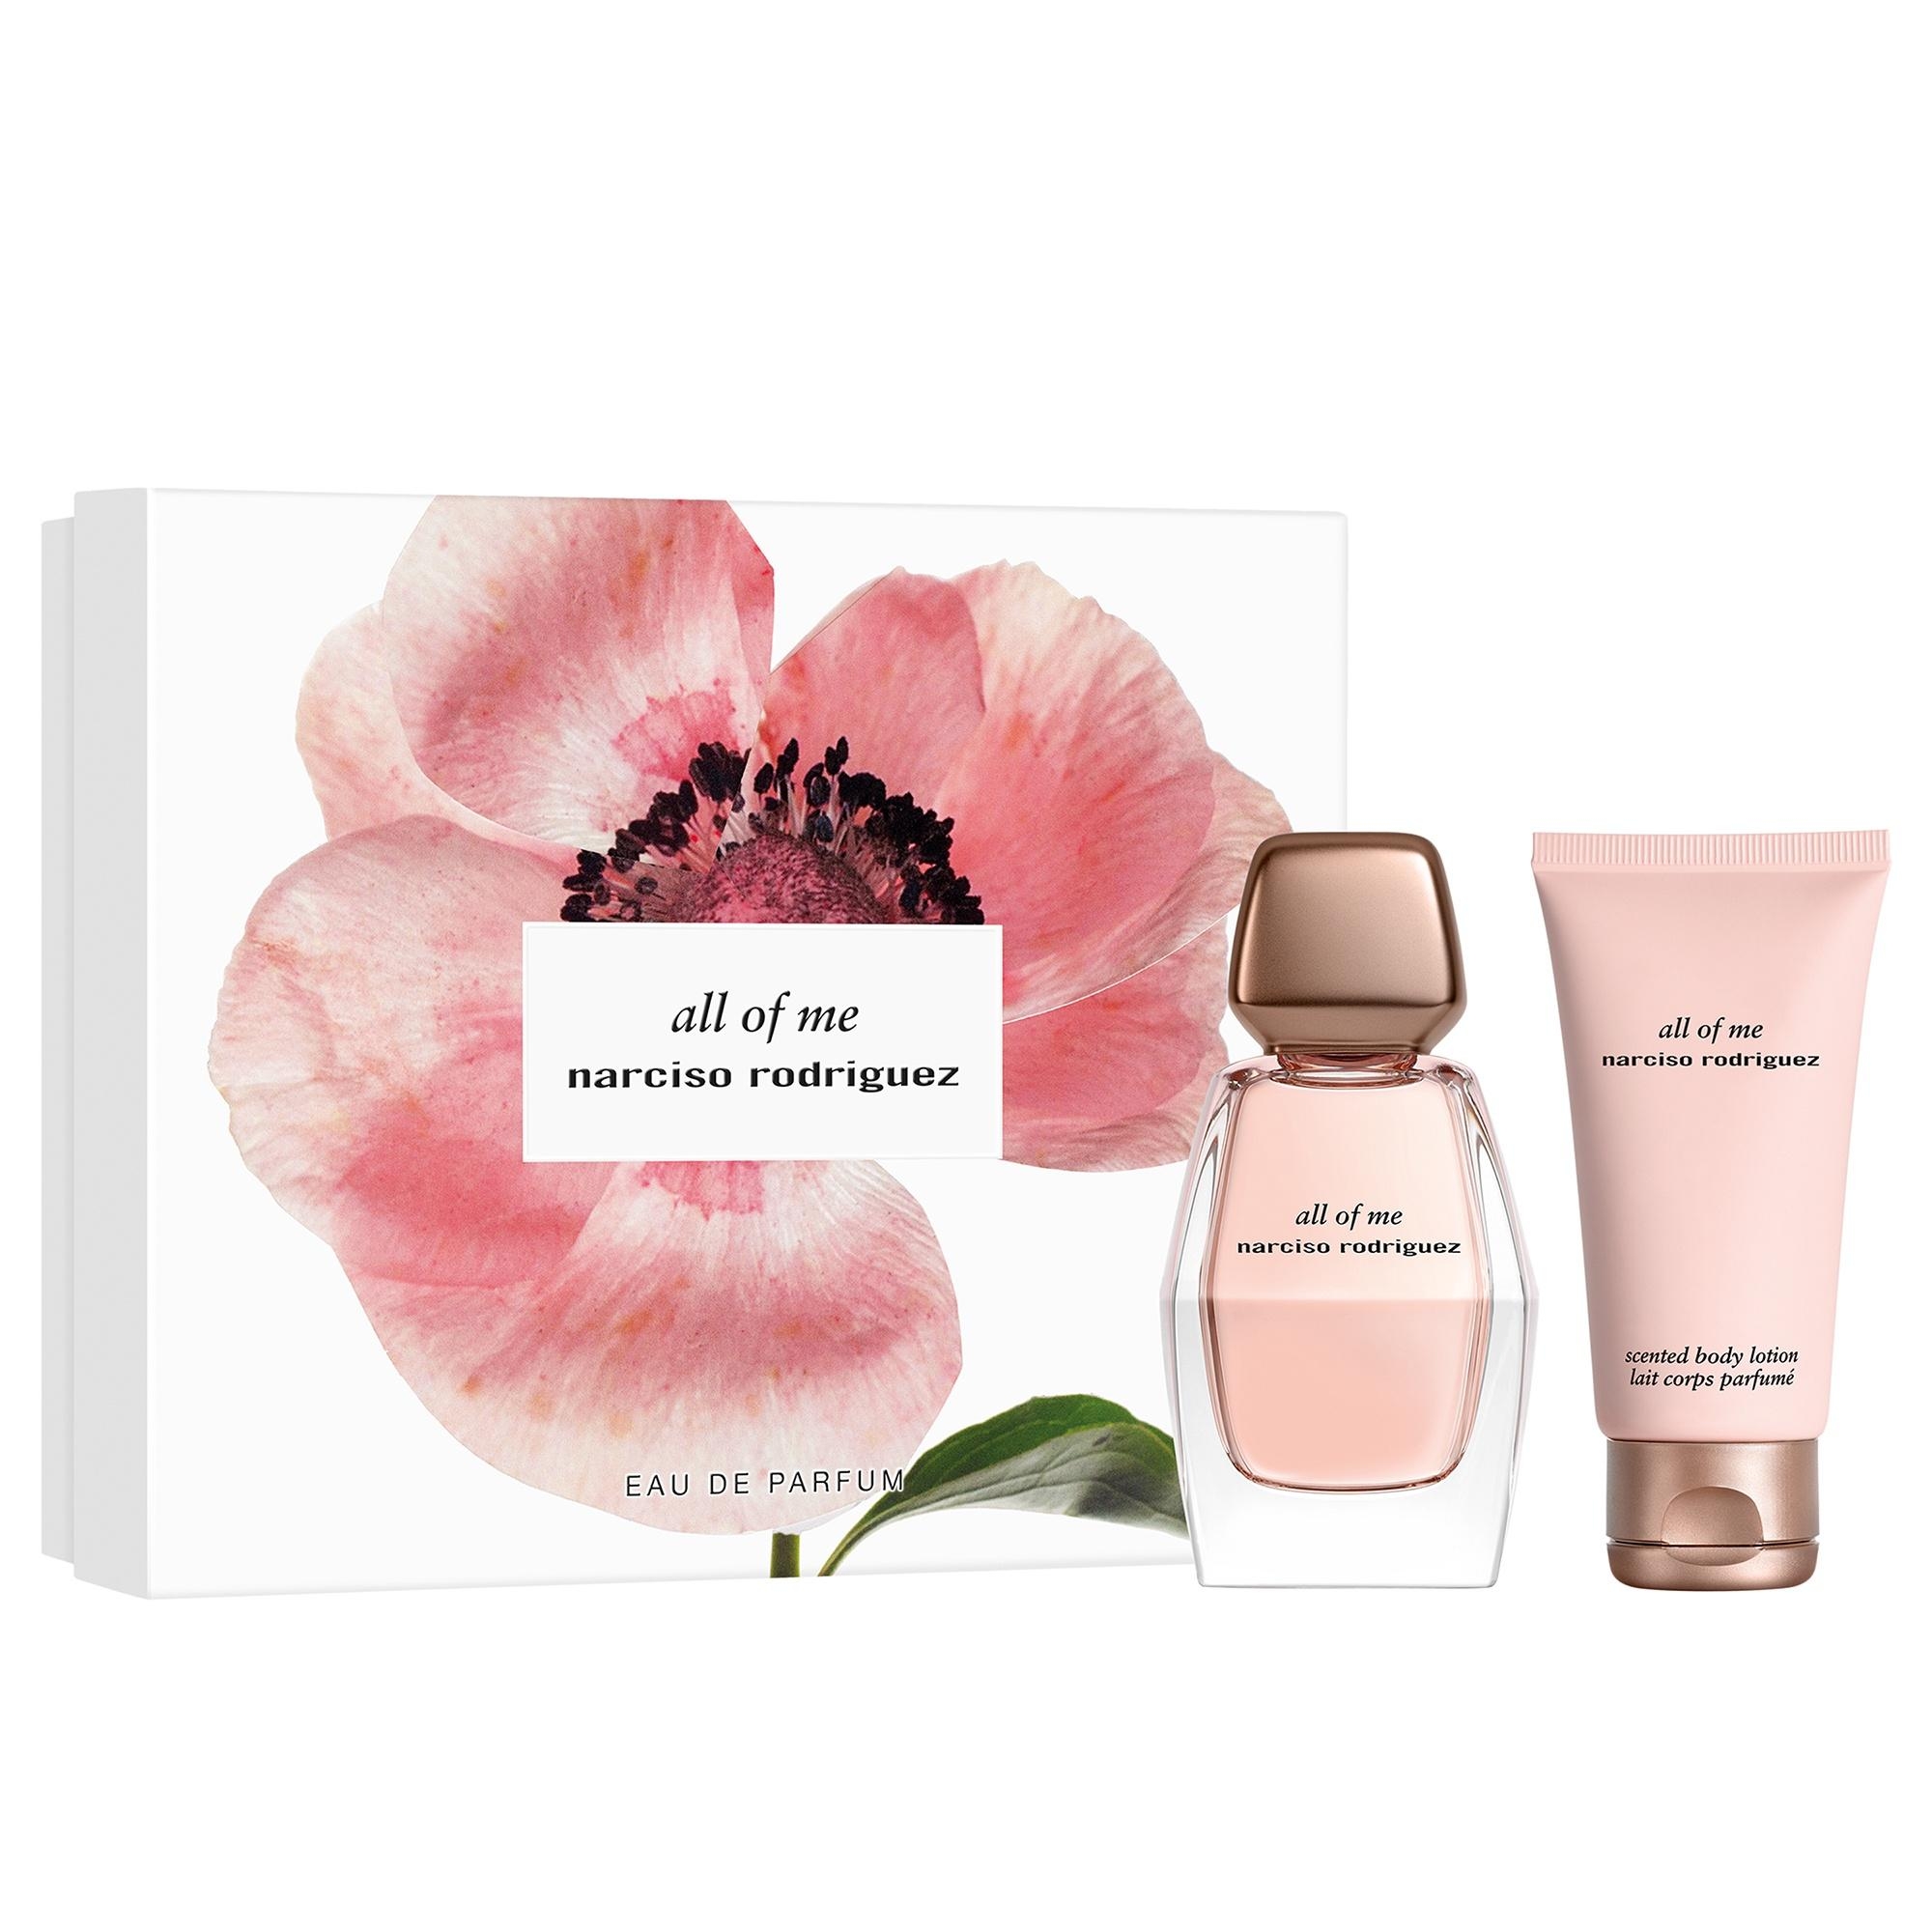 Product image from All of me Eau de Parfum Spring Set